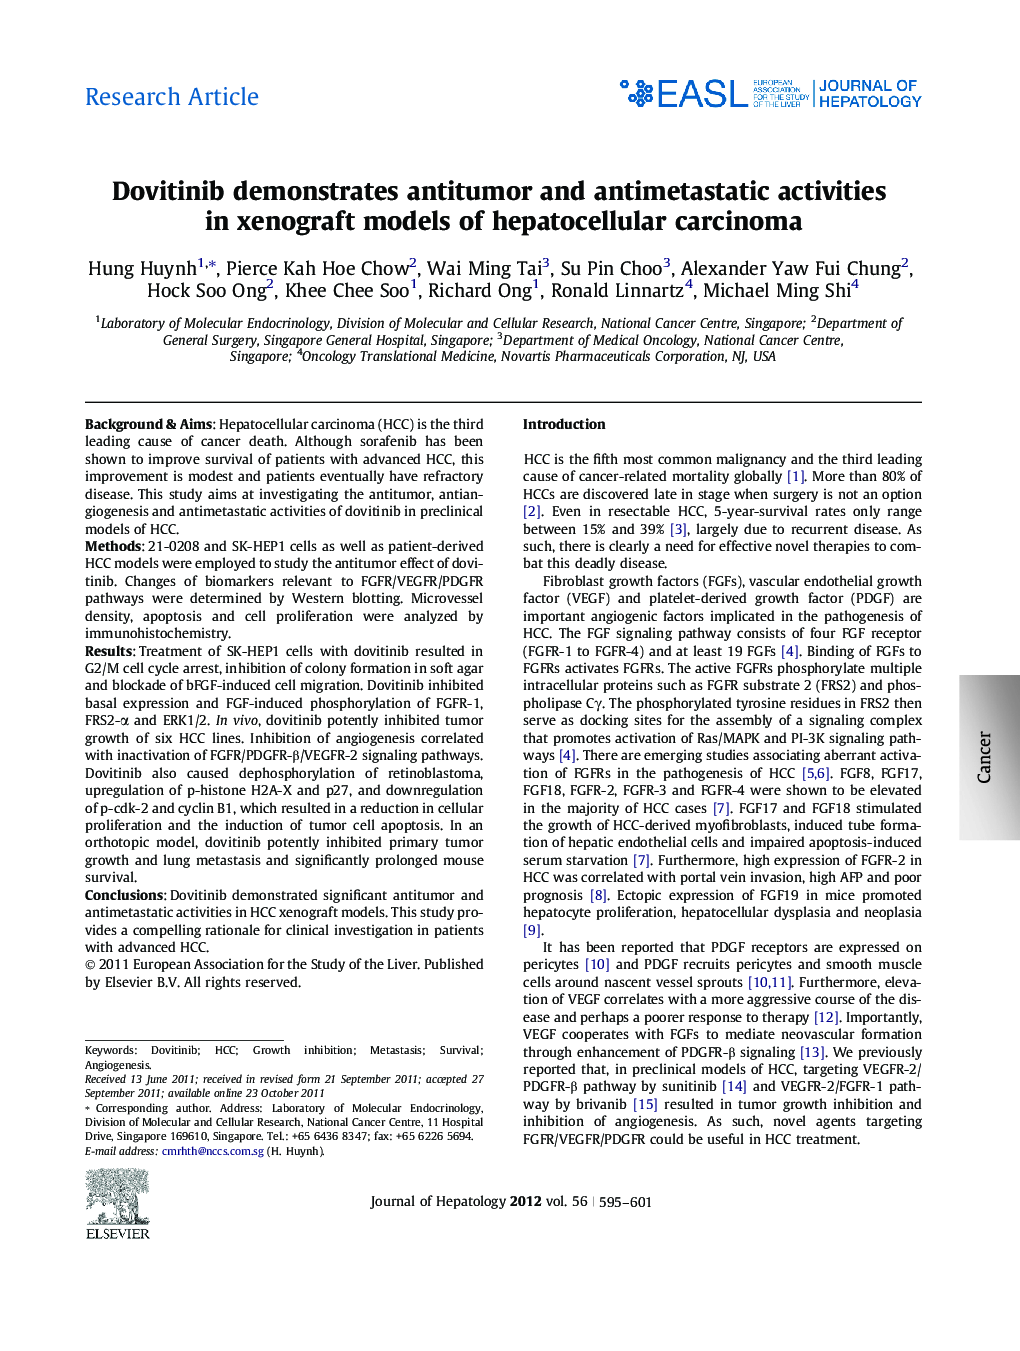 Research ArticleDovitinib demonstrates antitumor and antimetastatic activities in xenograft models of hepatocellular carcinoma